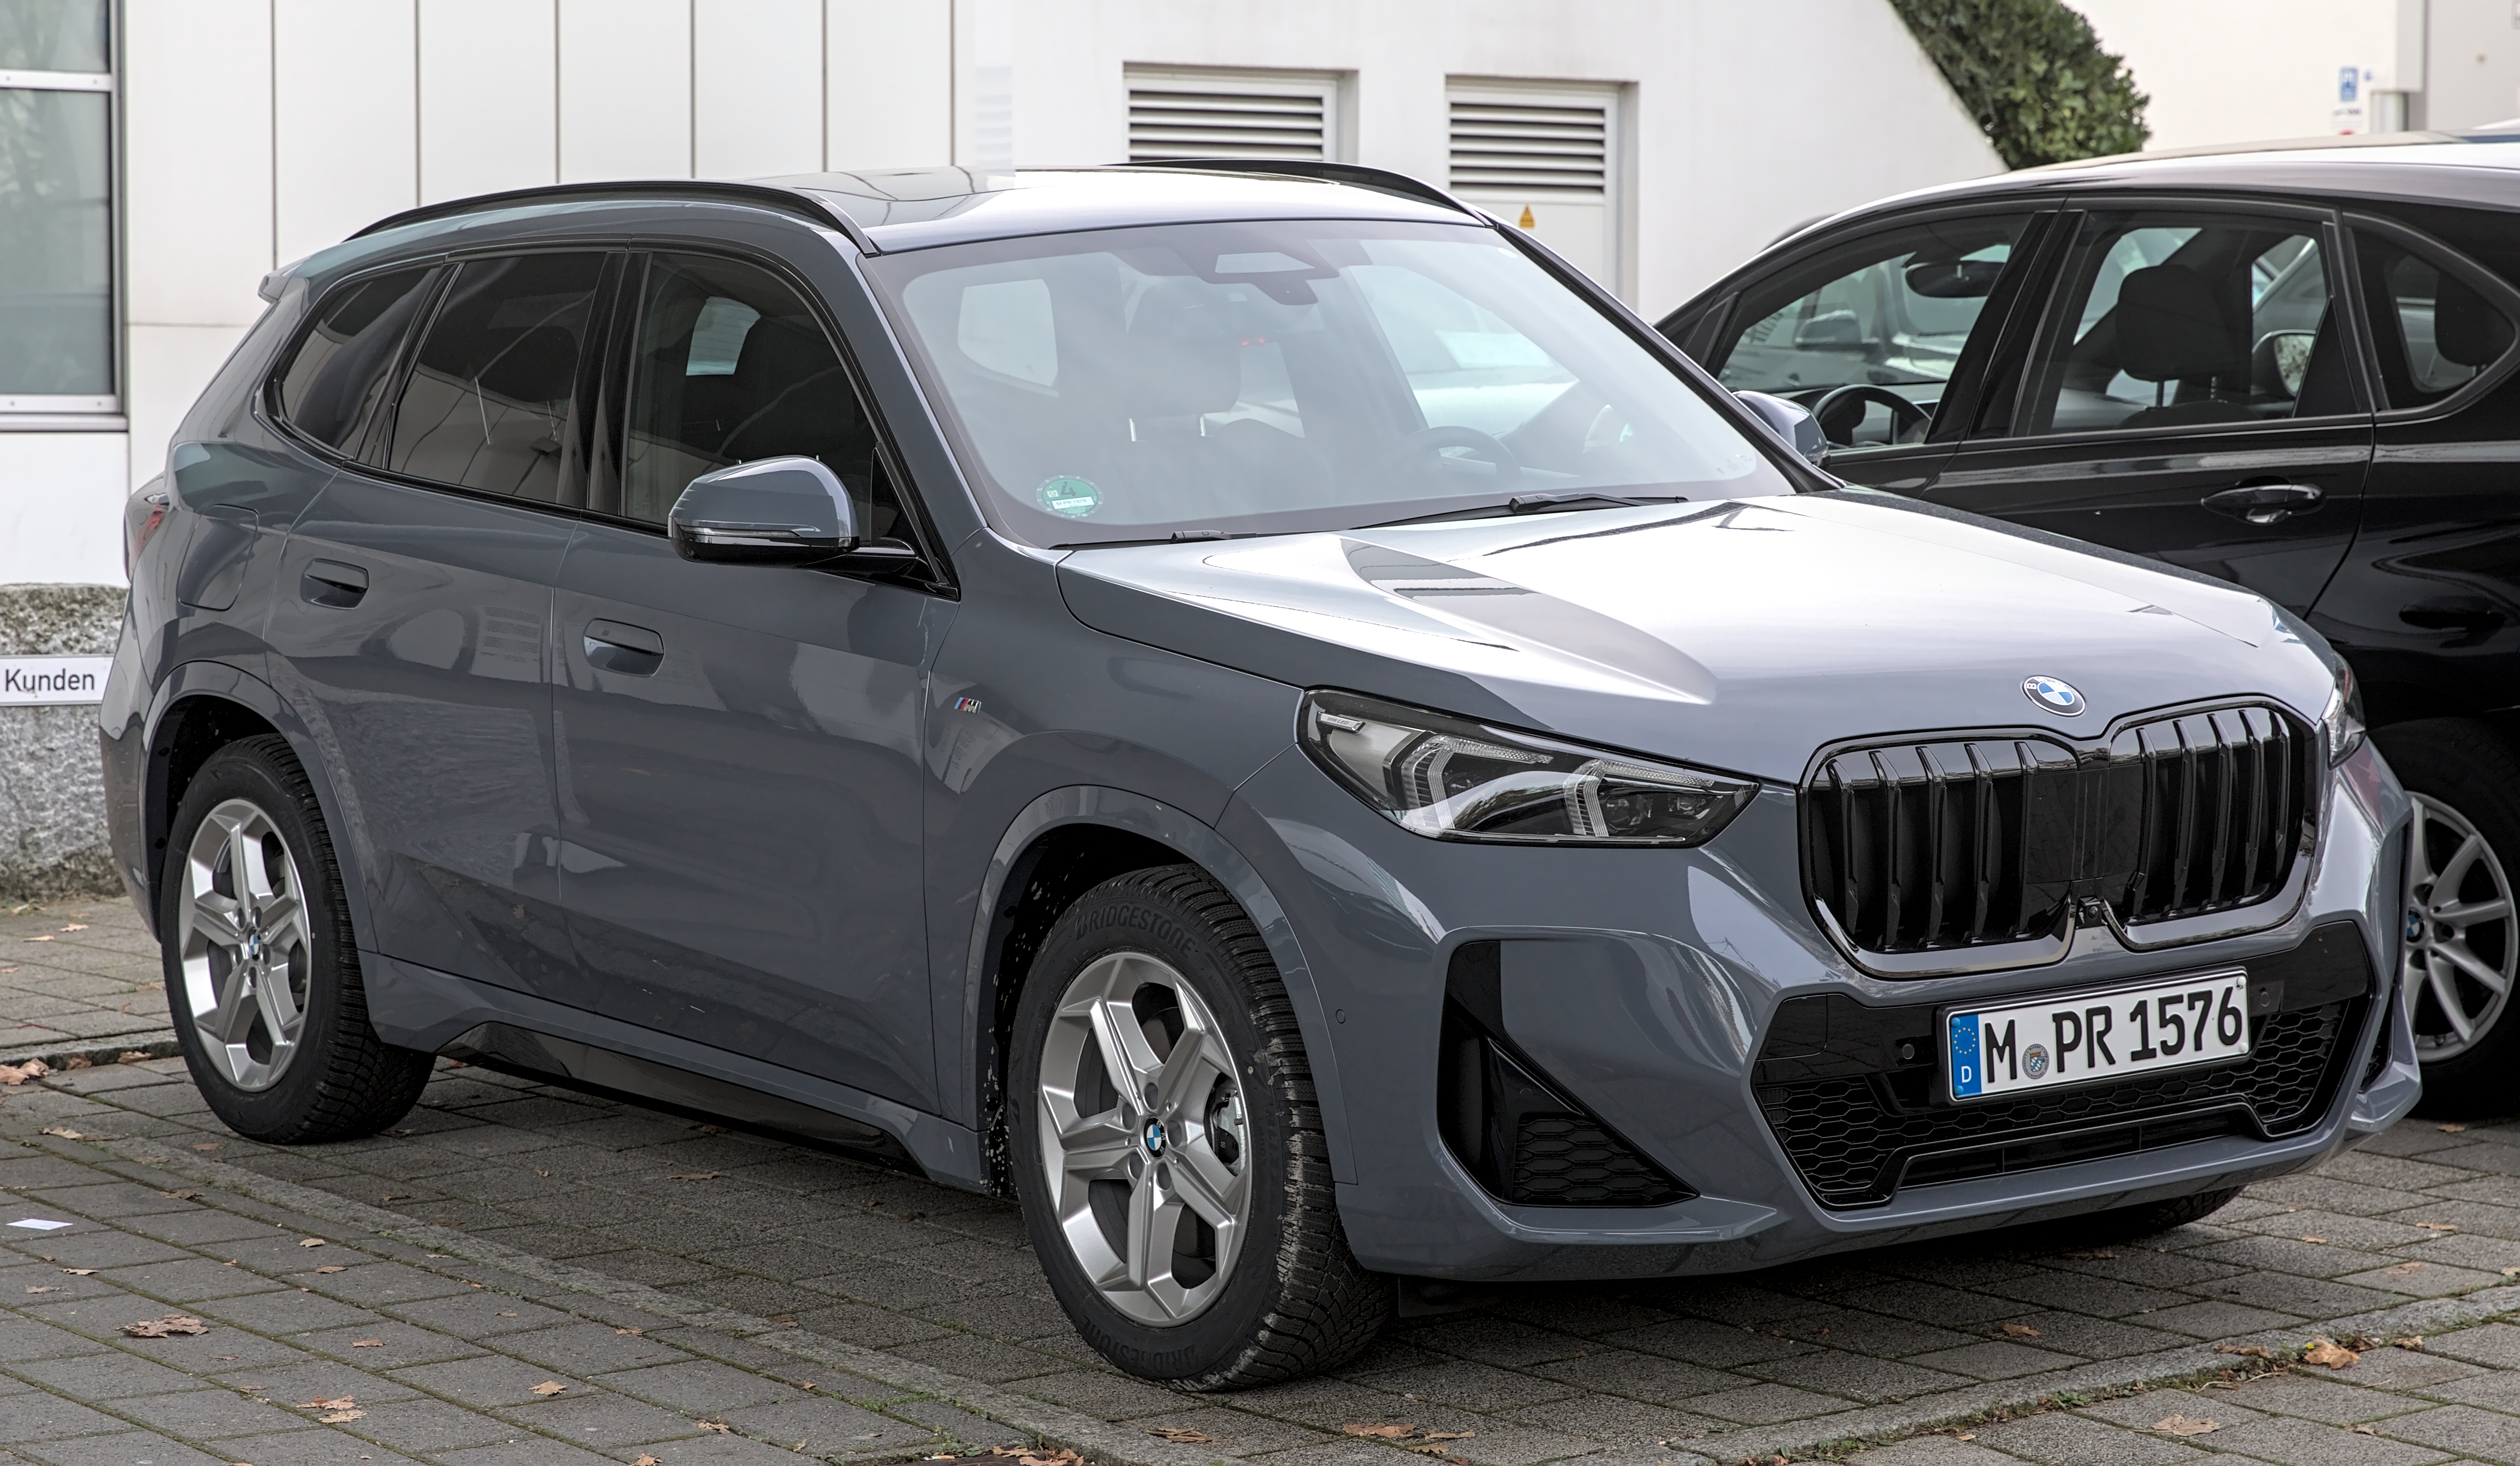 File:BMW X1 U11 Interior4.jpg - Wikipedia